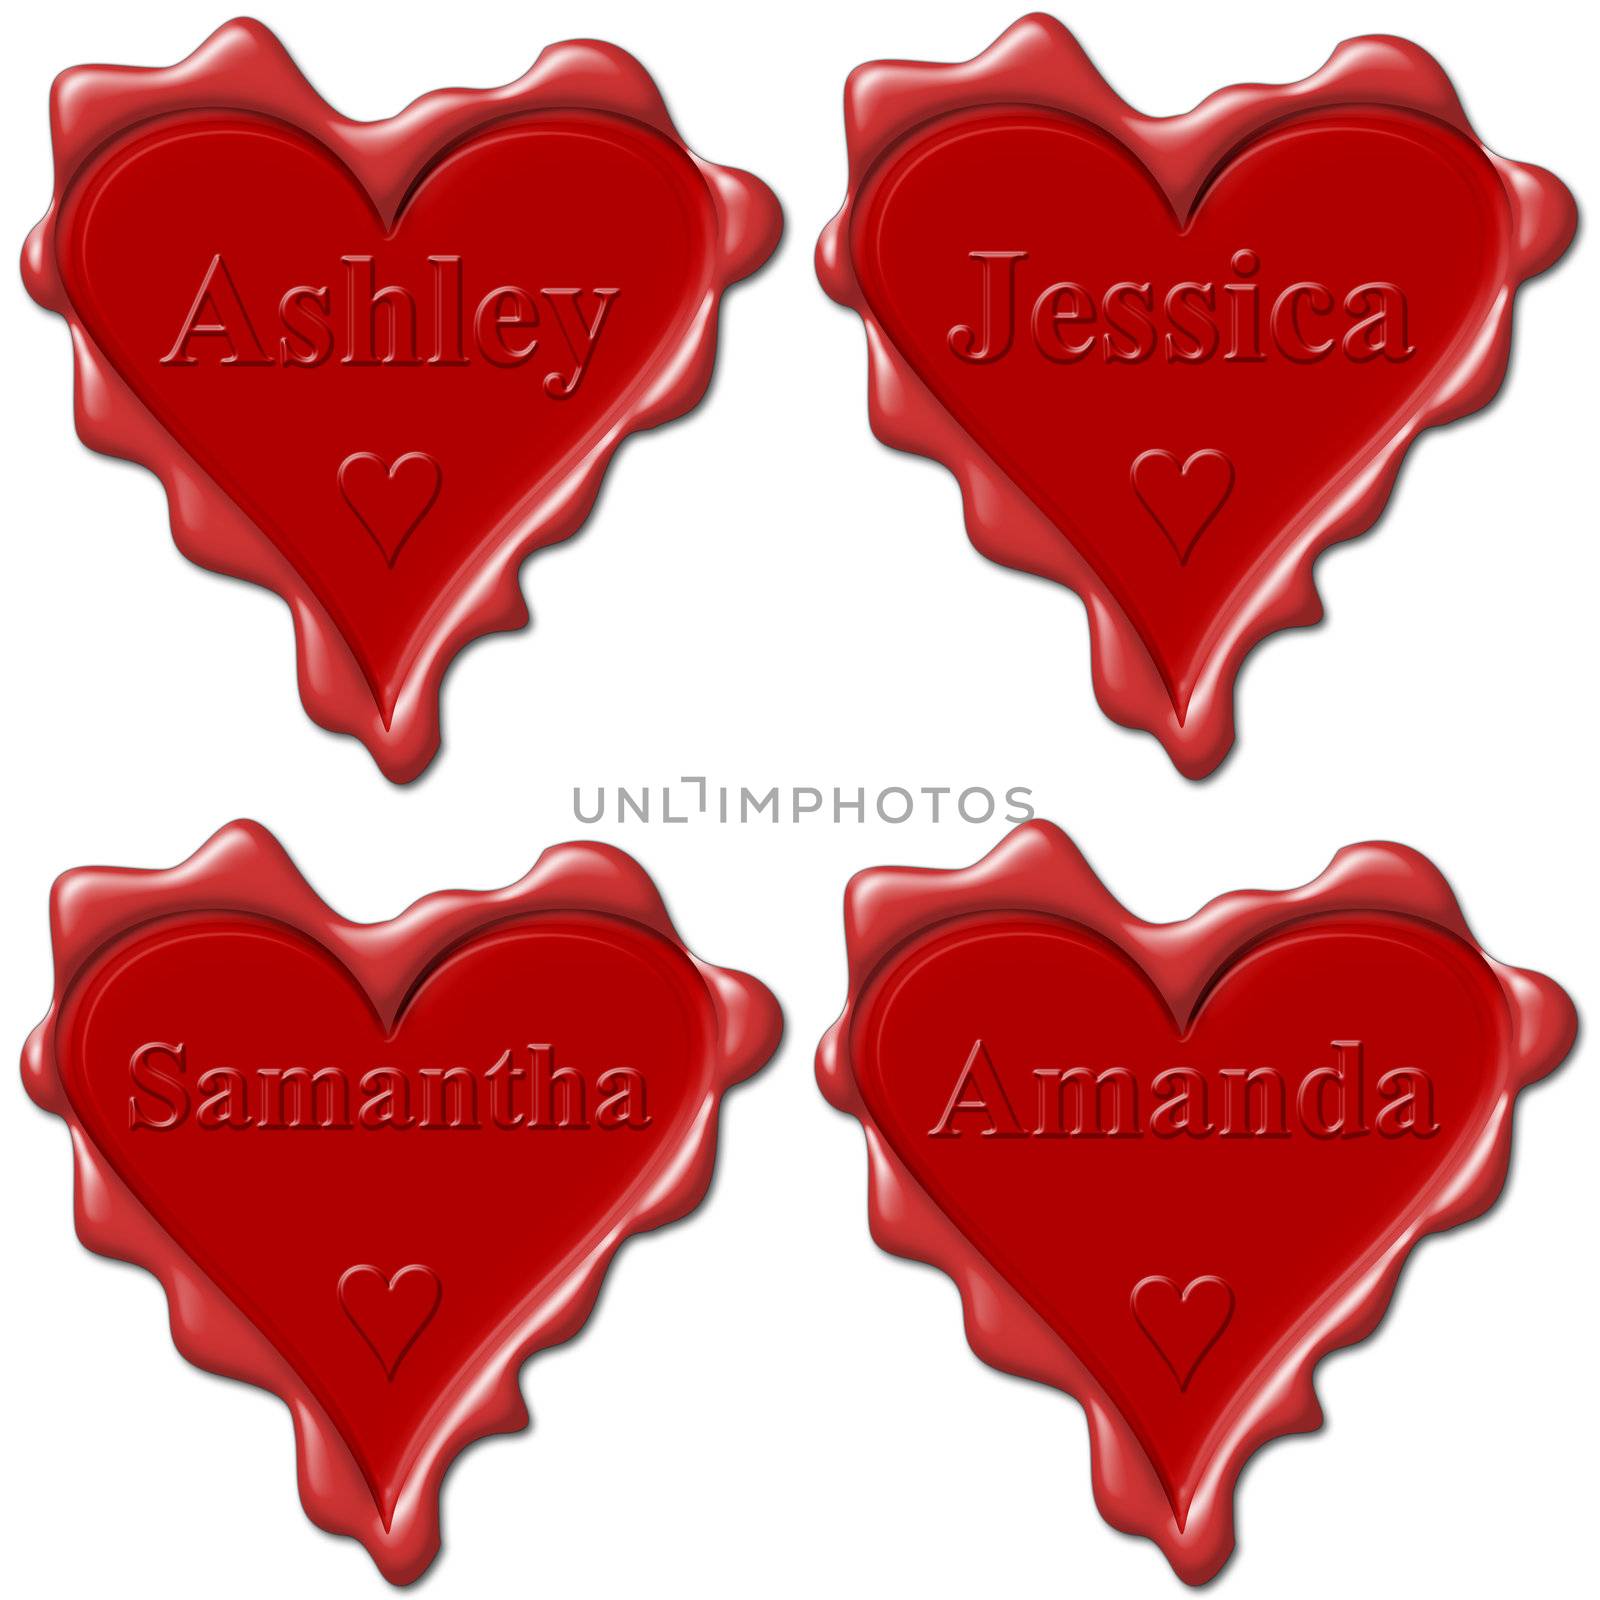 Valentine love hearts with names: Ashley, Jessica, Samantha, Amanda